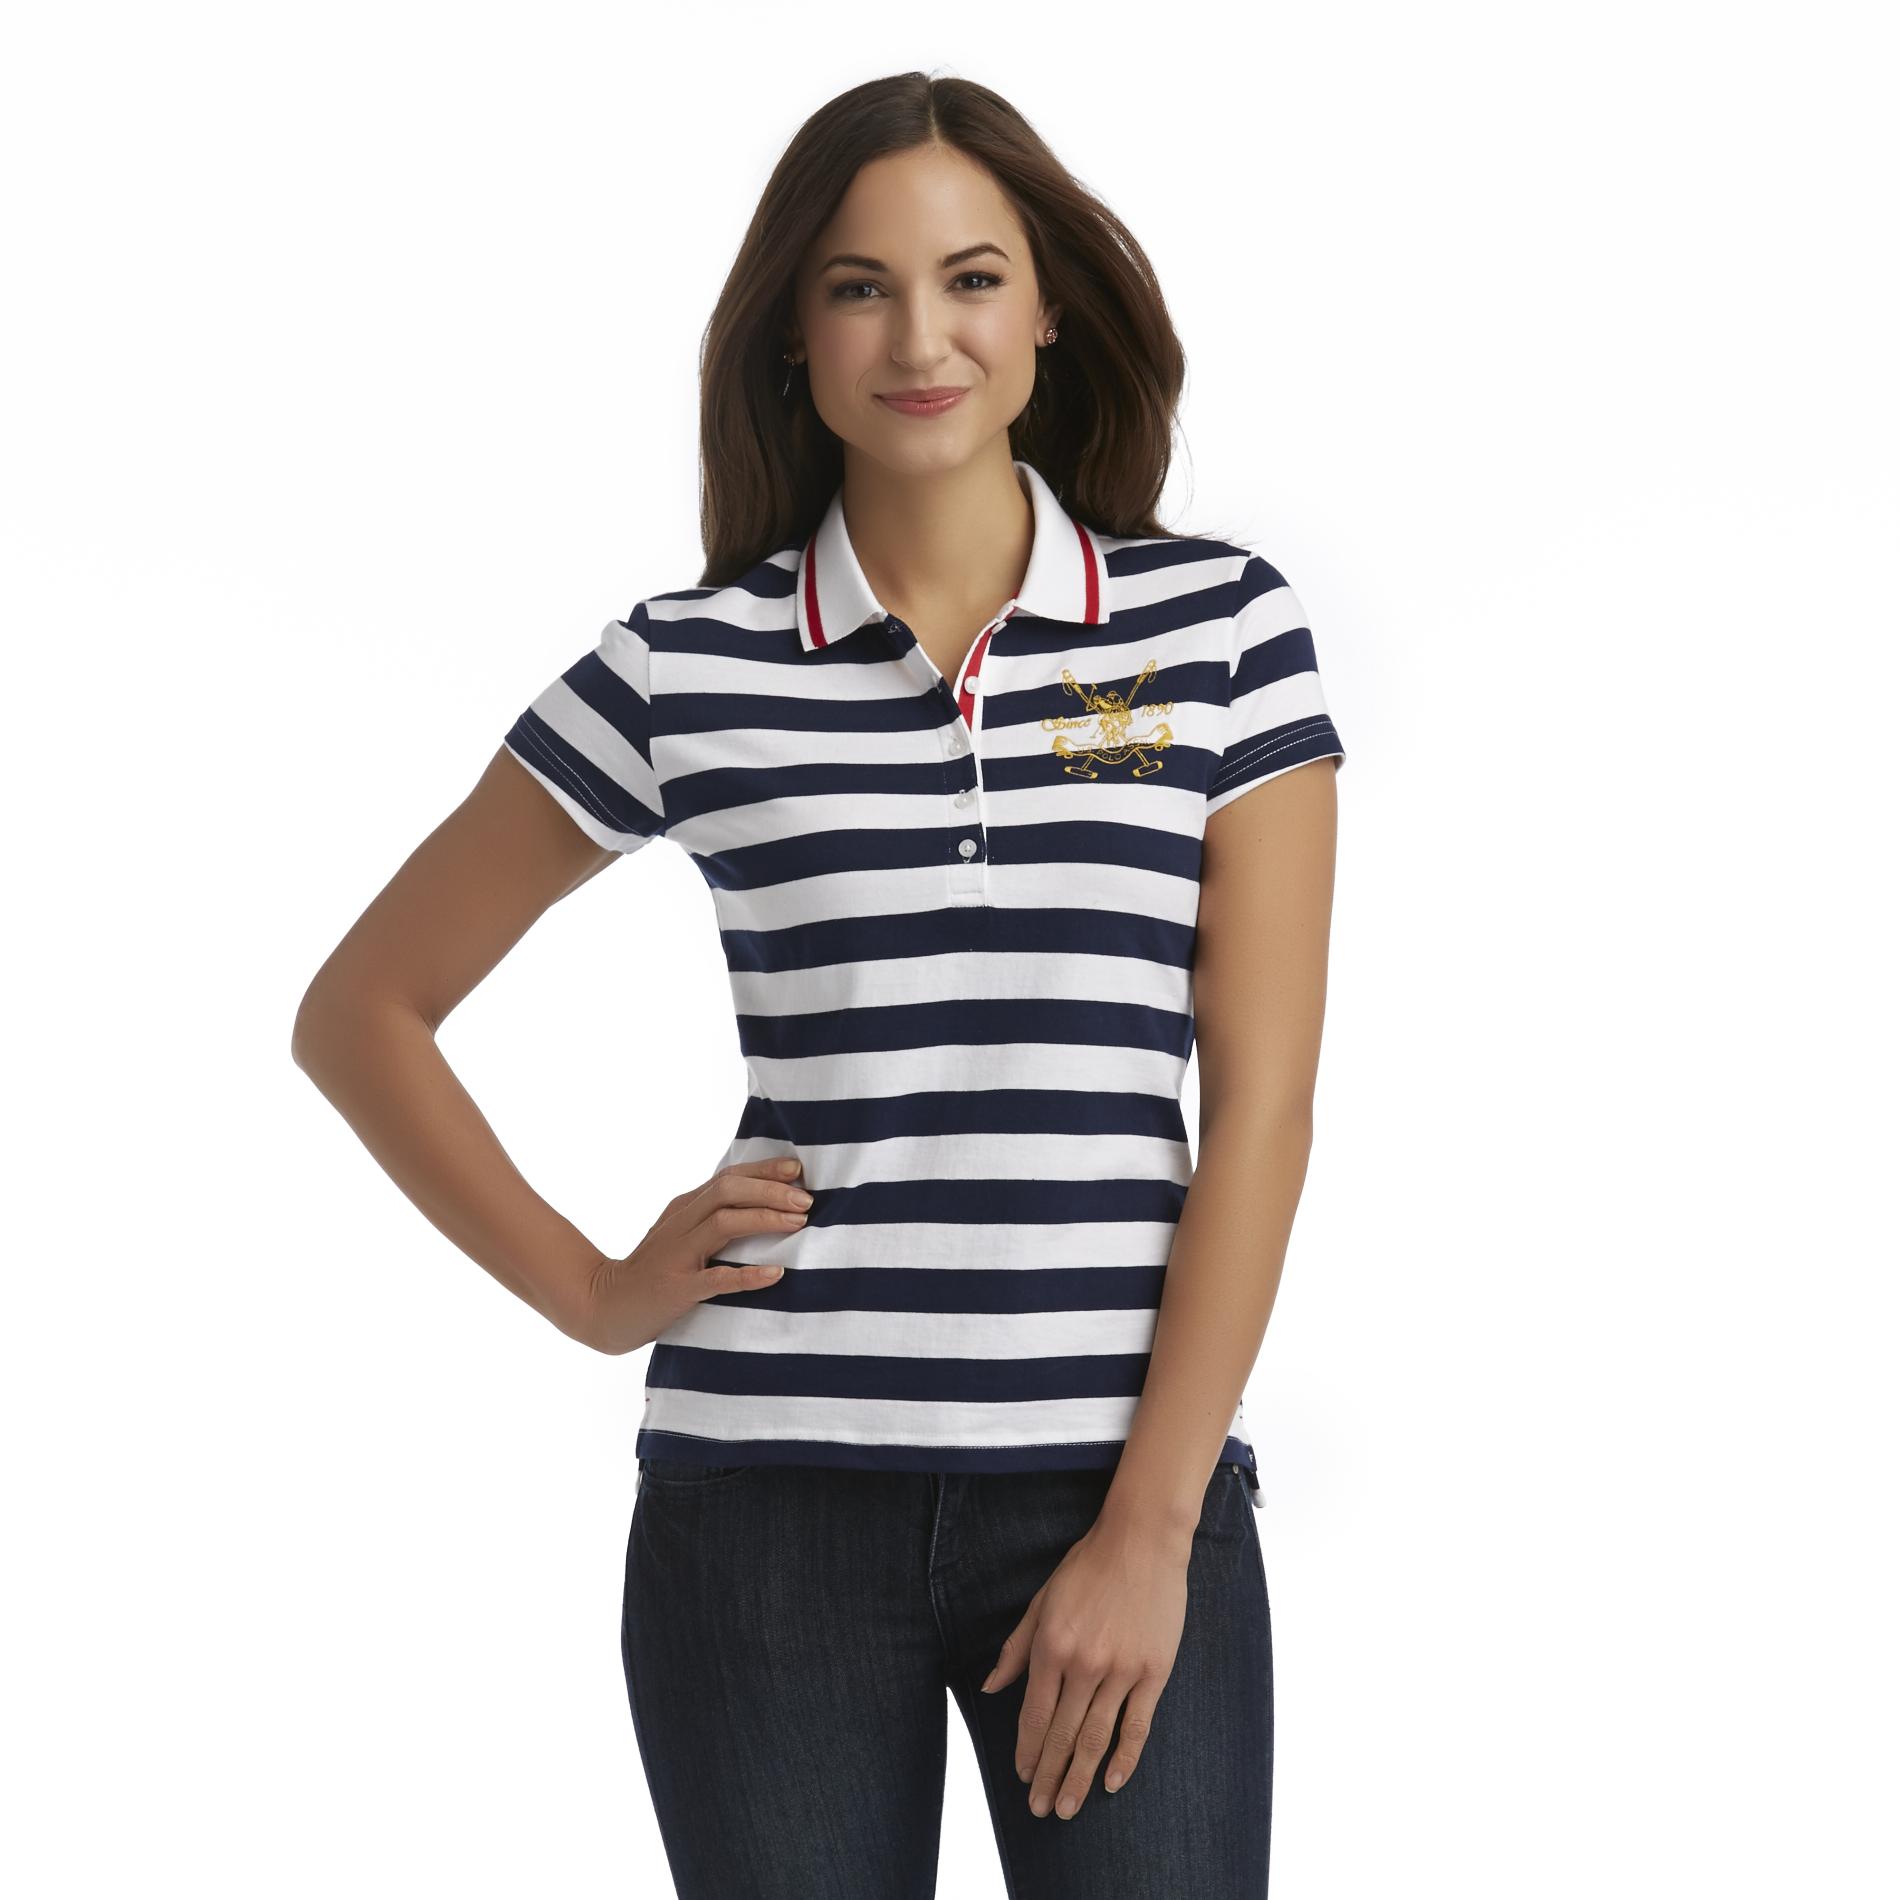 U.S. Polo Assn. Women's Polo Shirt - Striped